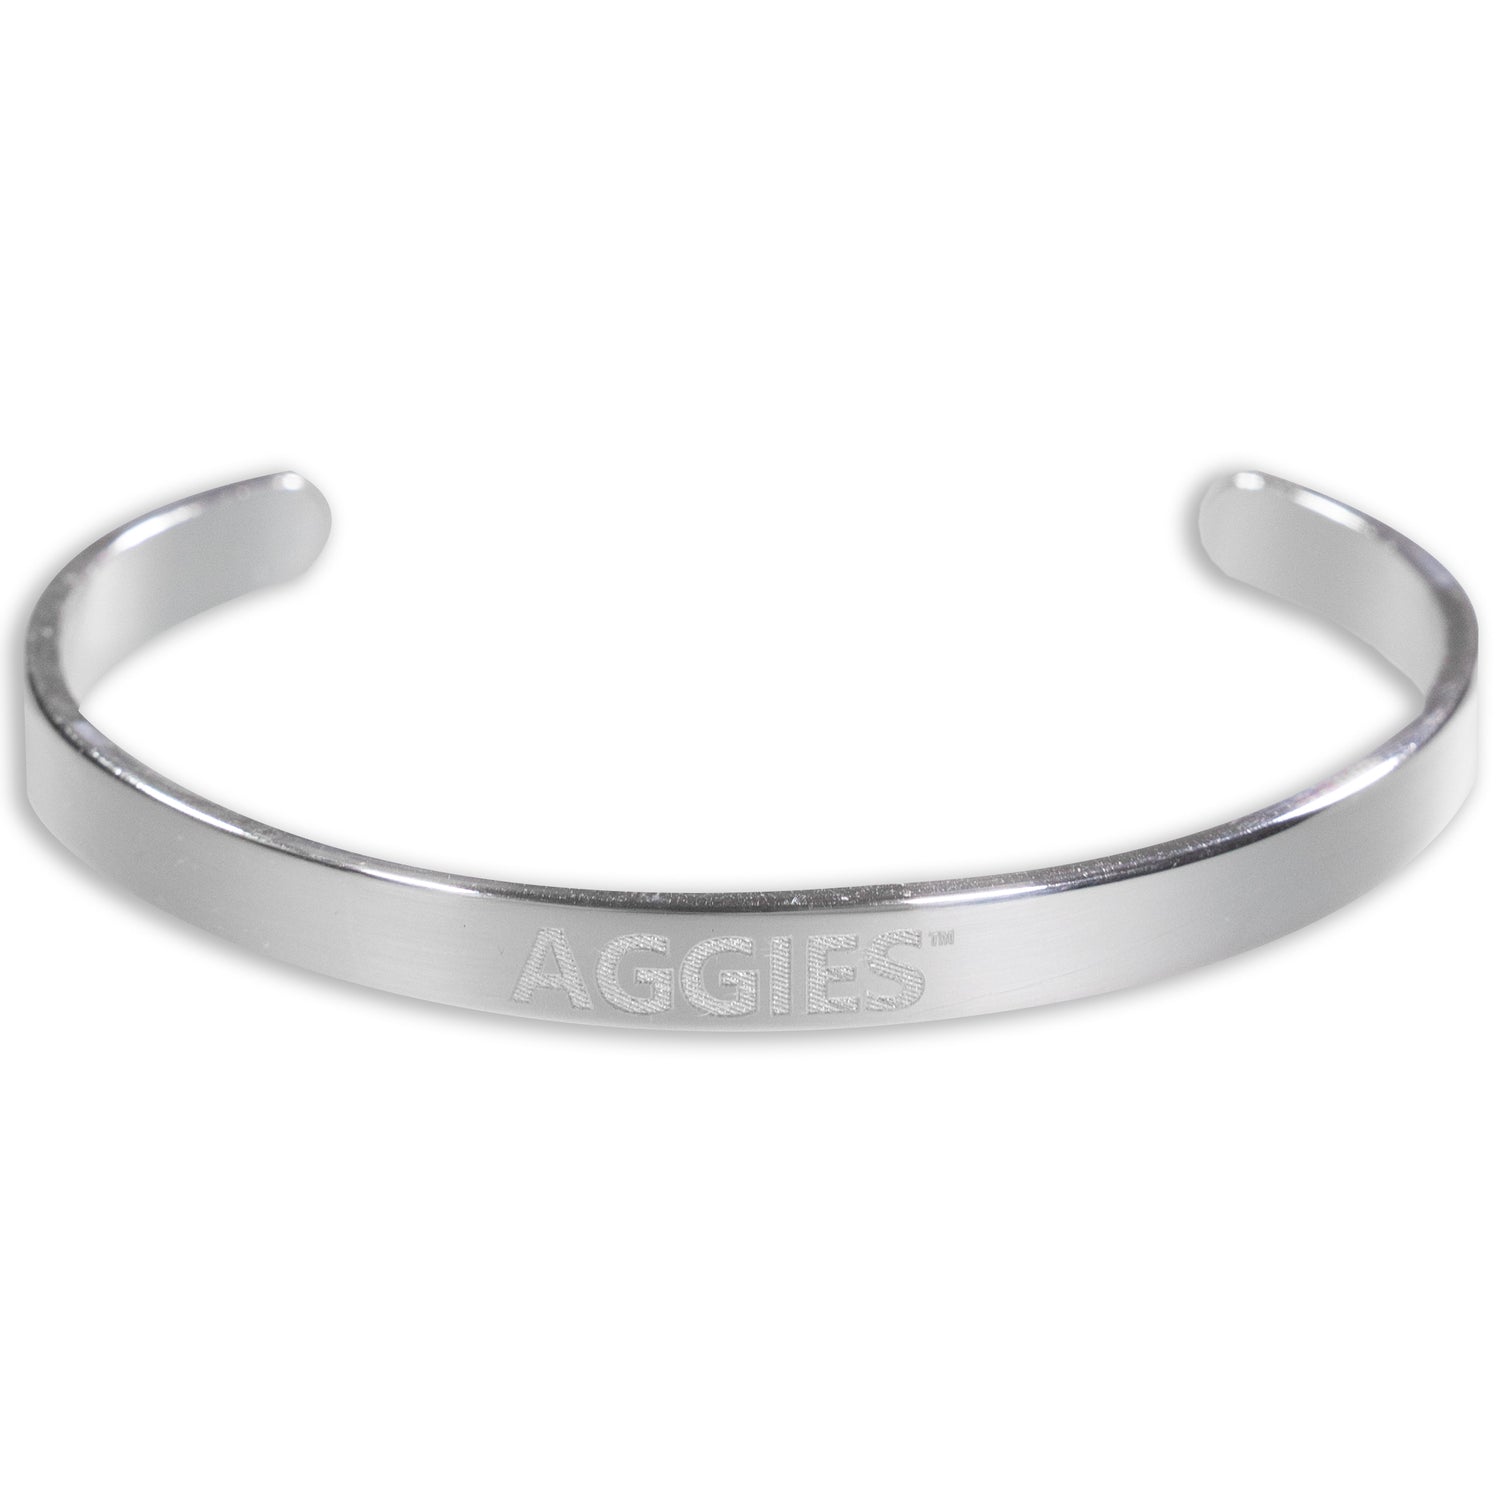 Aggies Bangle Silver